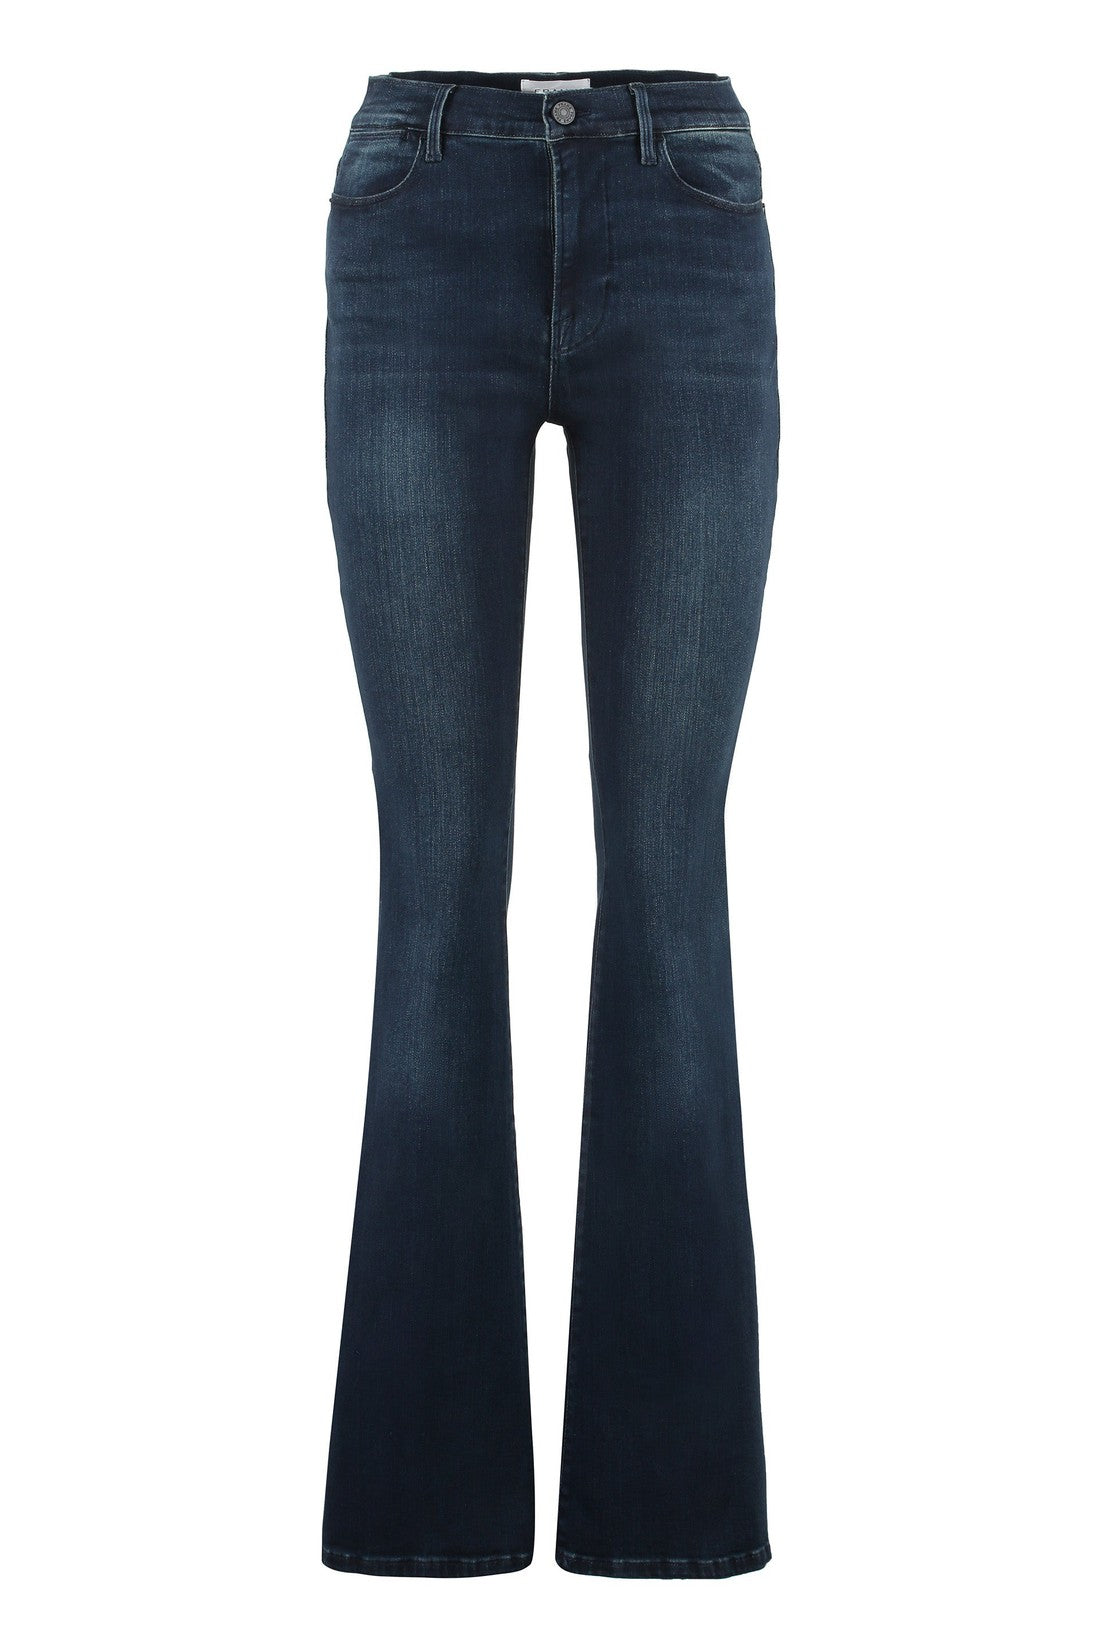 Frame-OUTLET-SALE-Le High Flare jeans-ARCHIVIST